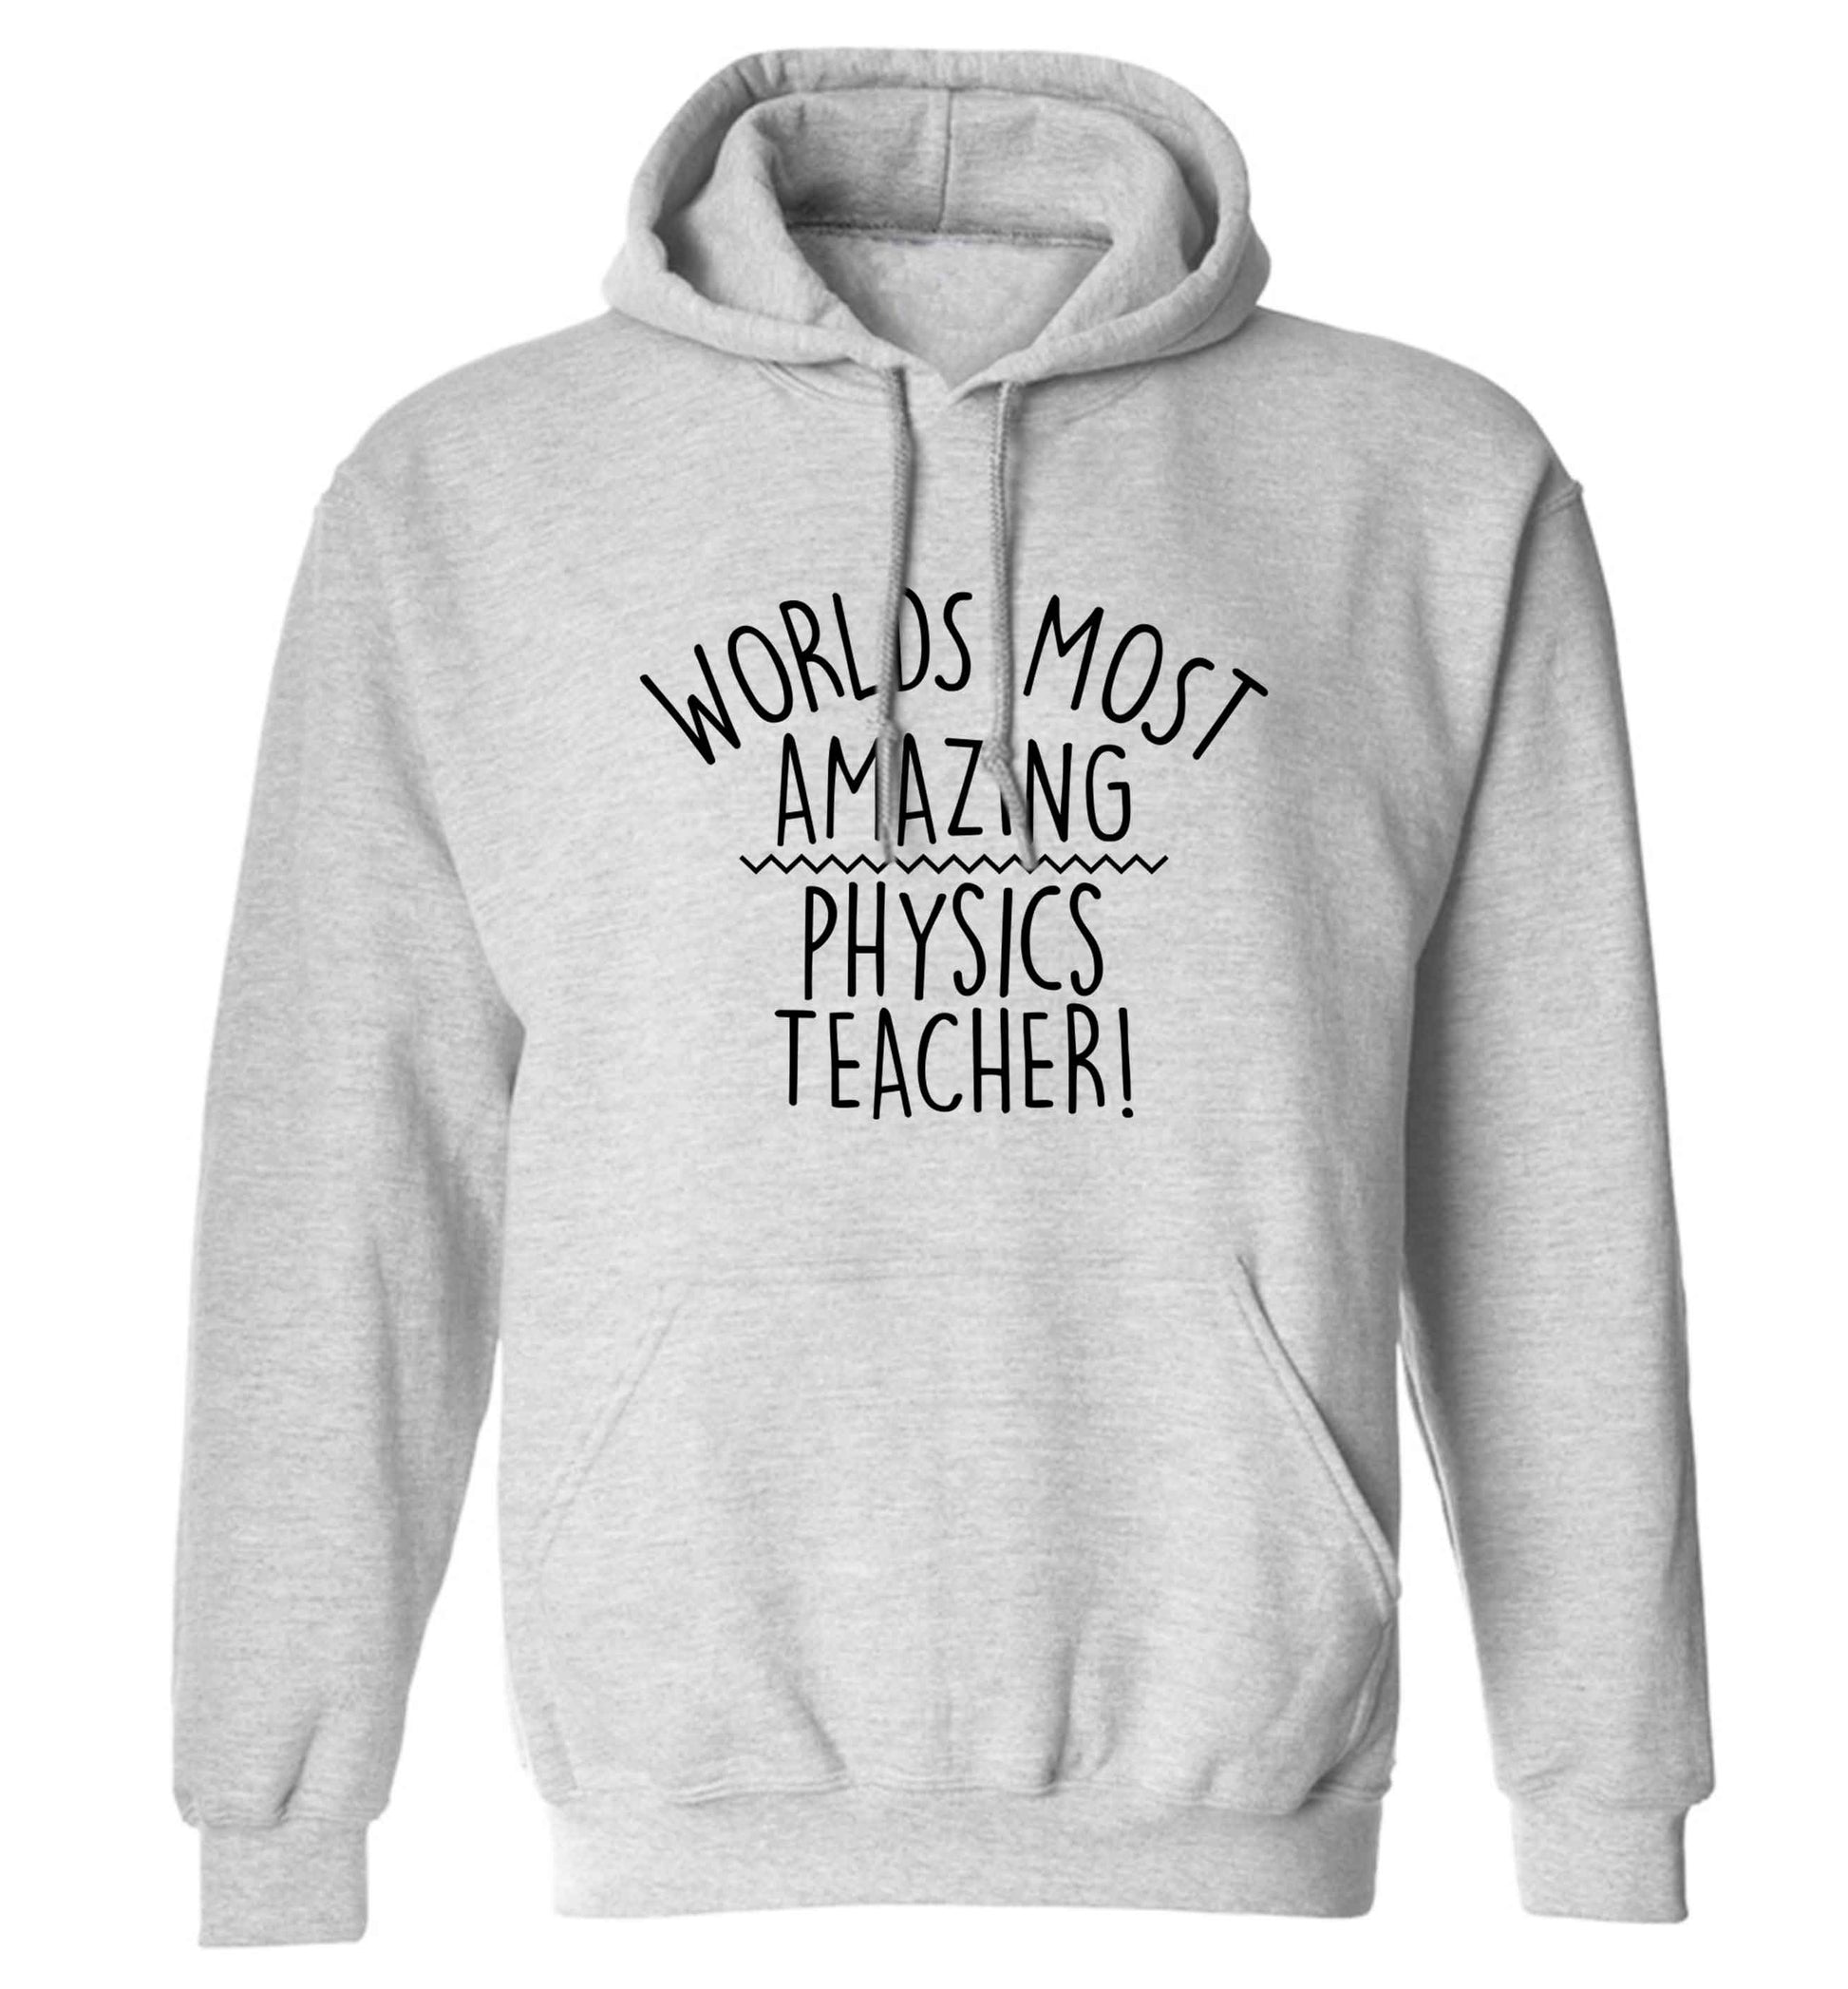 Worlds most amazing physics teacher adults unisex grey hoodie 2XL